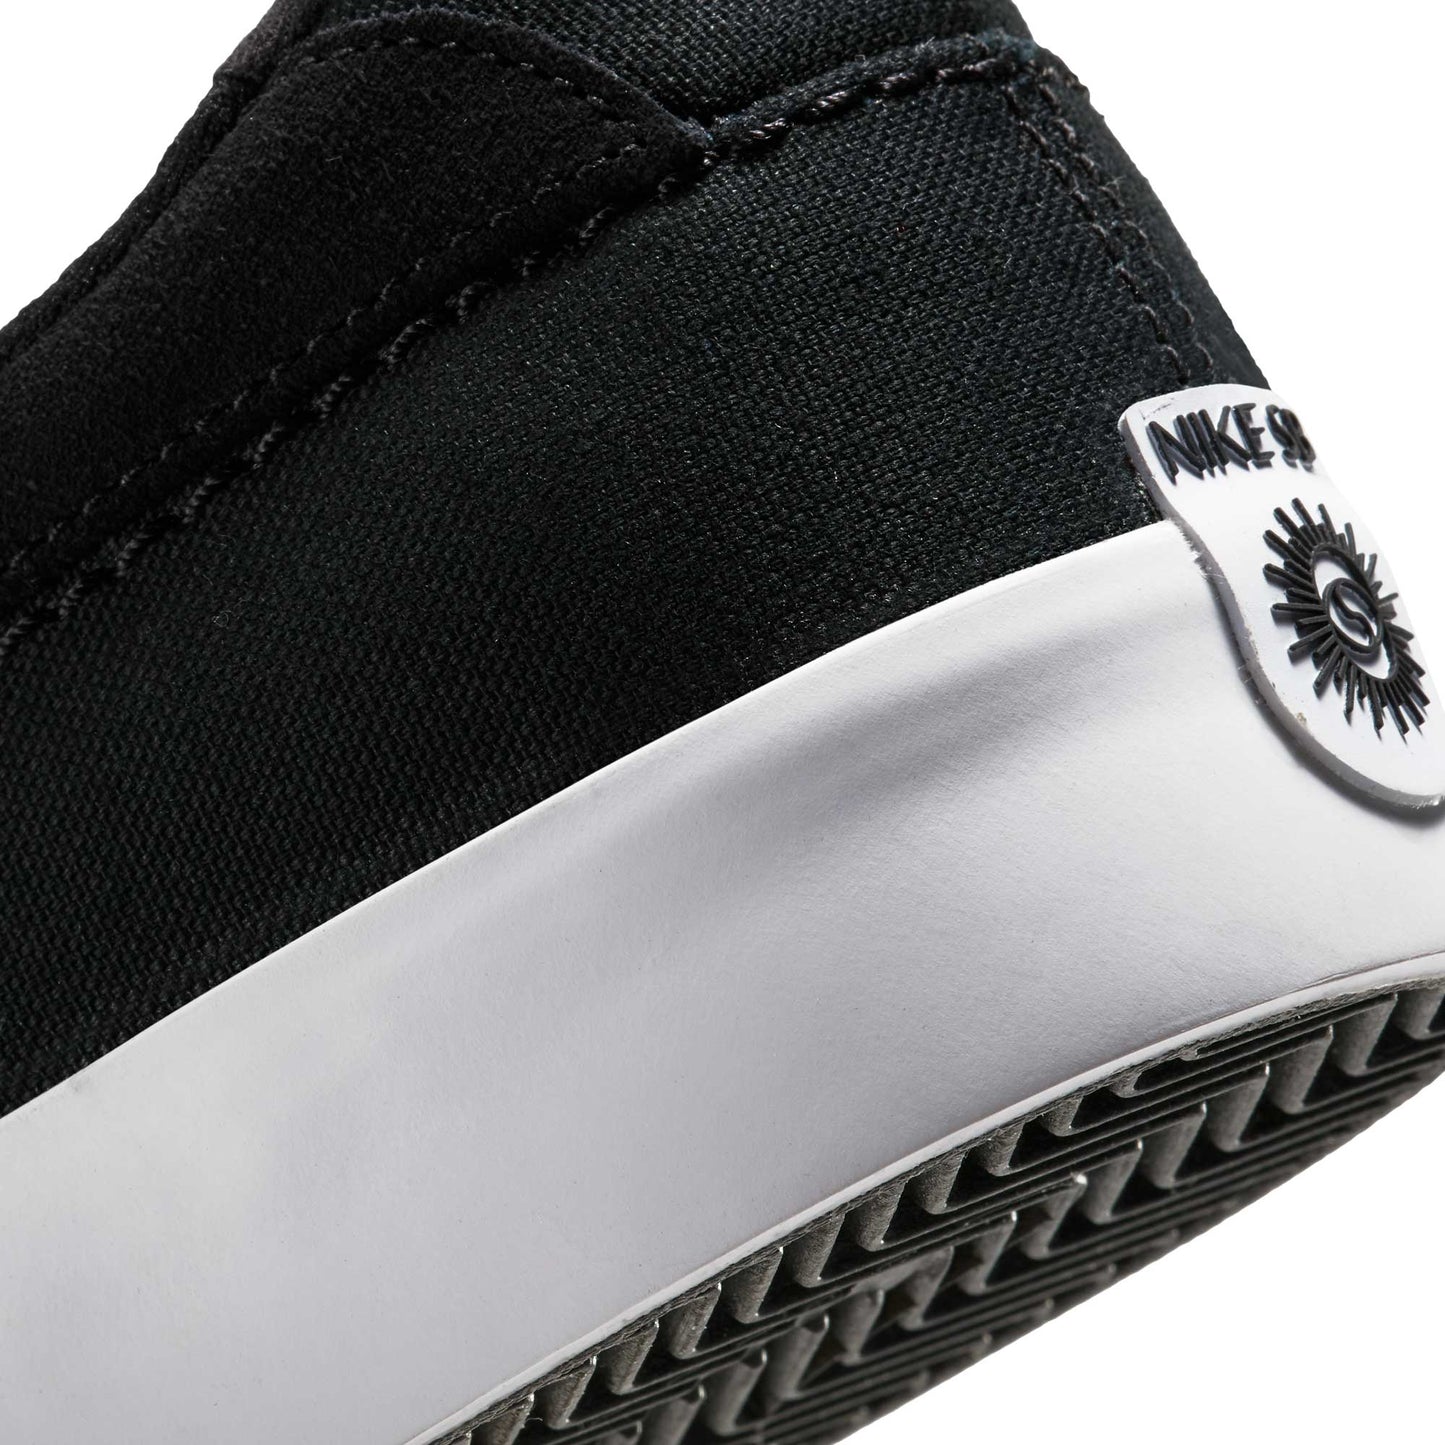 Nike SB Shane, black/white-black - Tiki Room Skateboards - 7